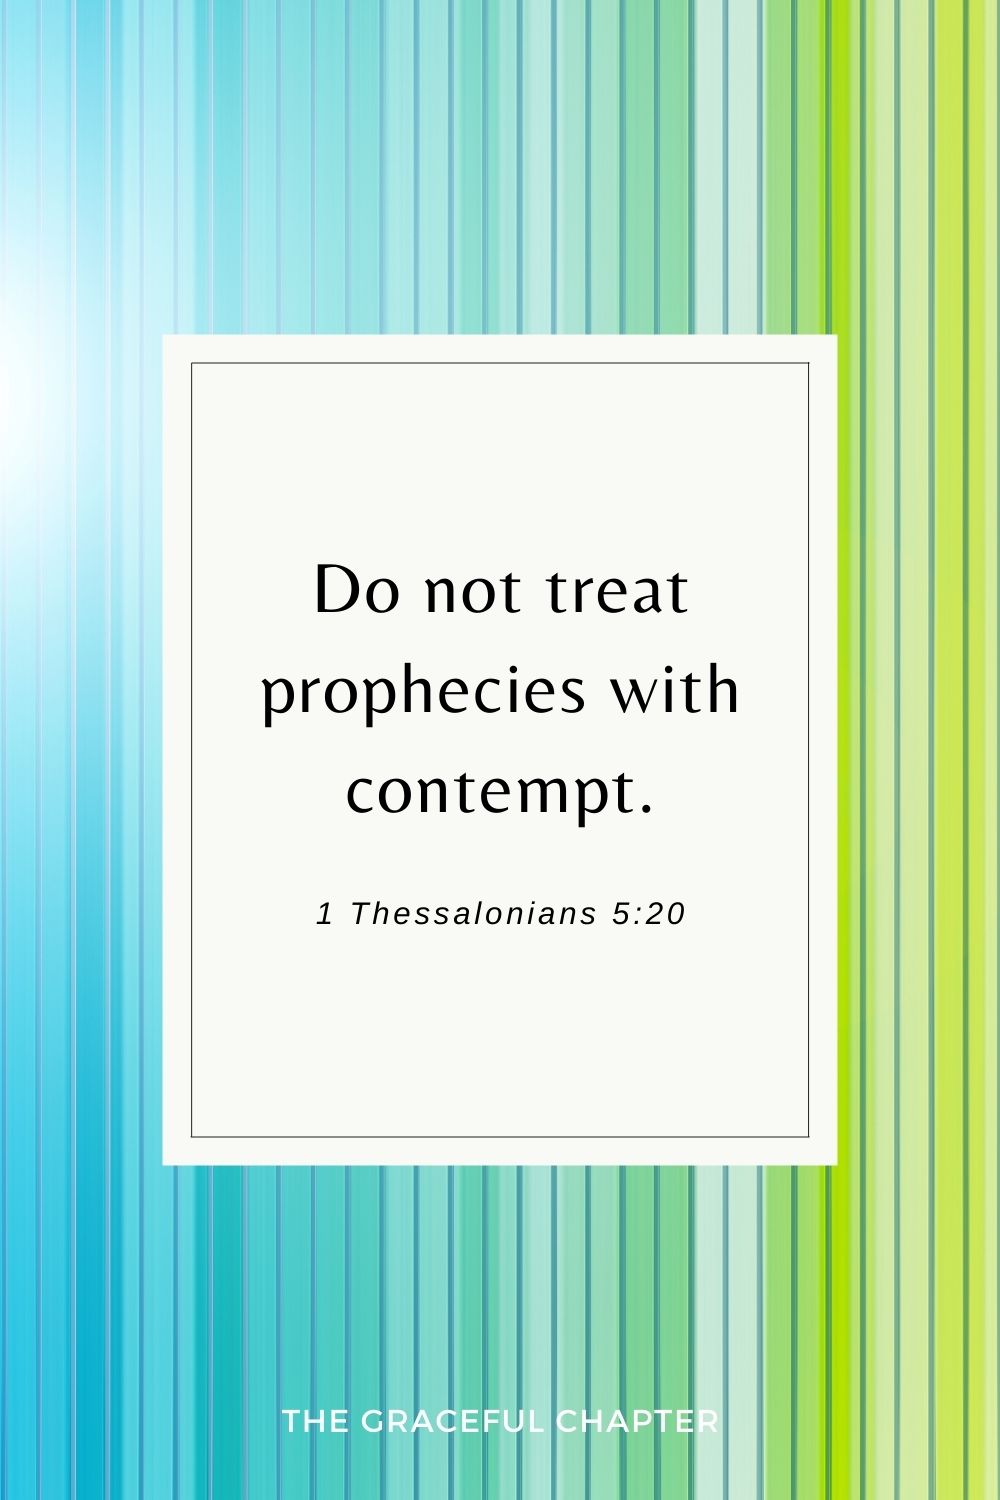 Do not treat prophecies with contempt. 1 Thessalonians 5:20